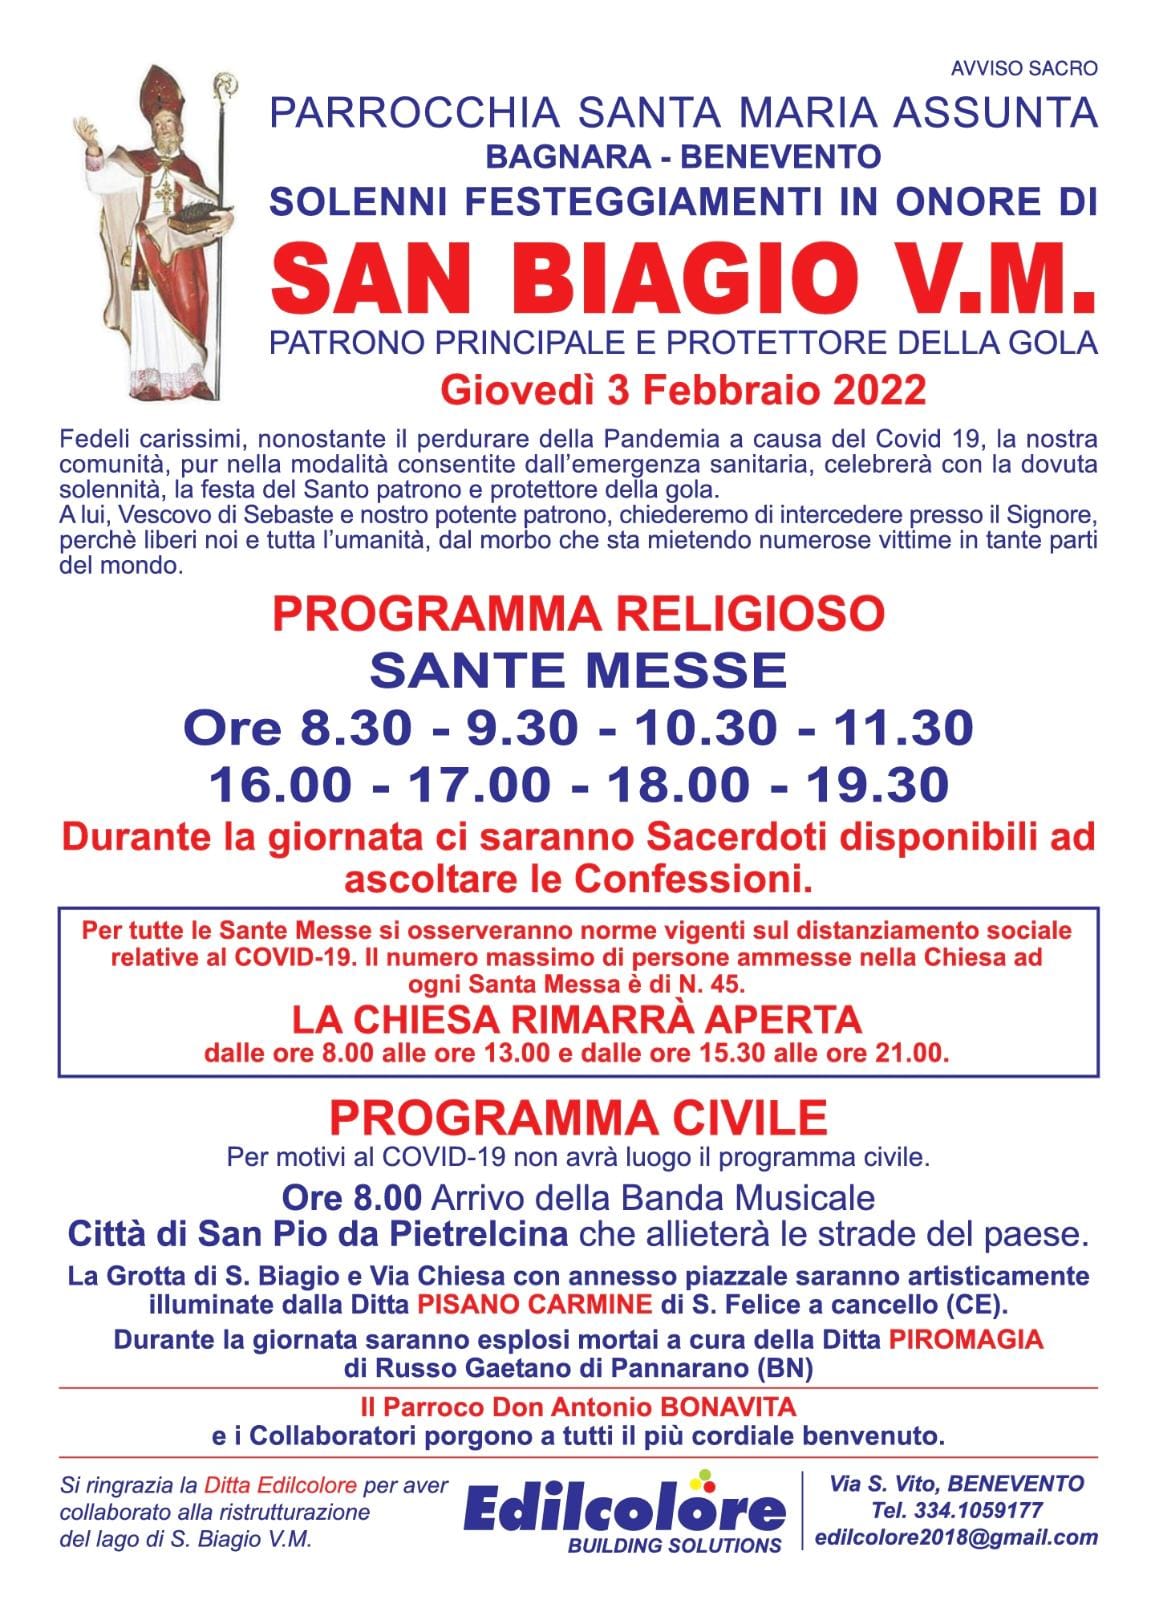 San Biagio, Bagnara si prepara alle celebrazioni